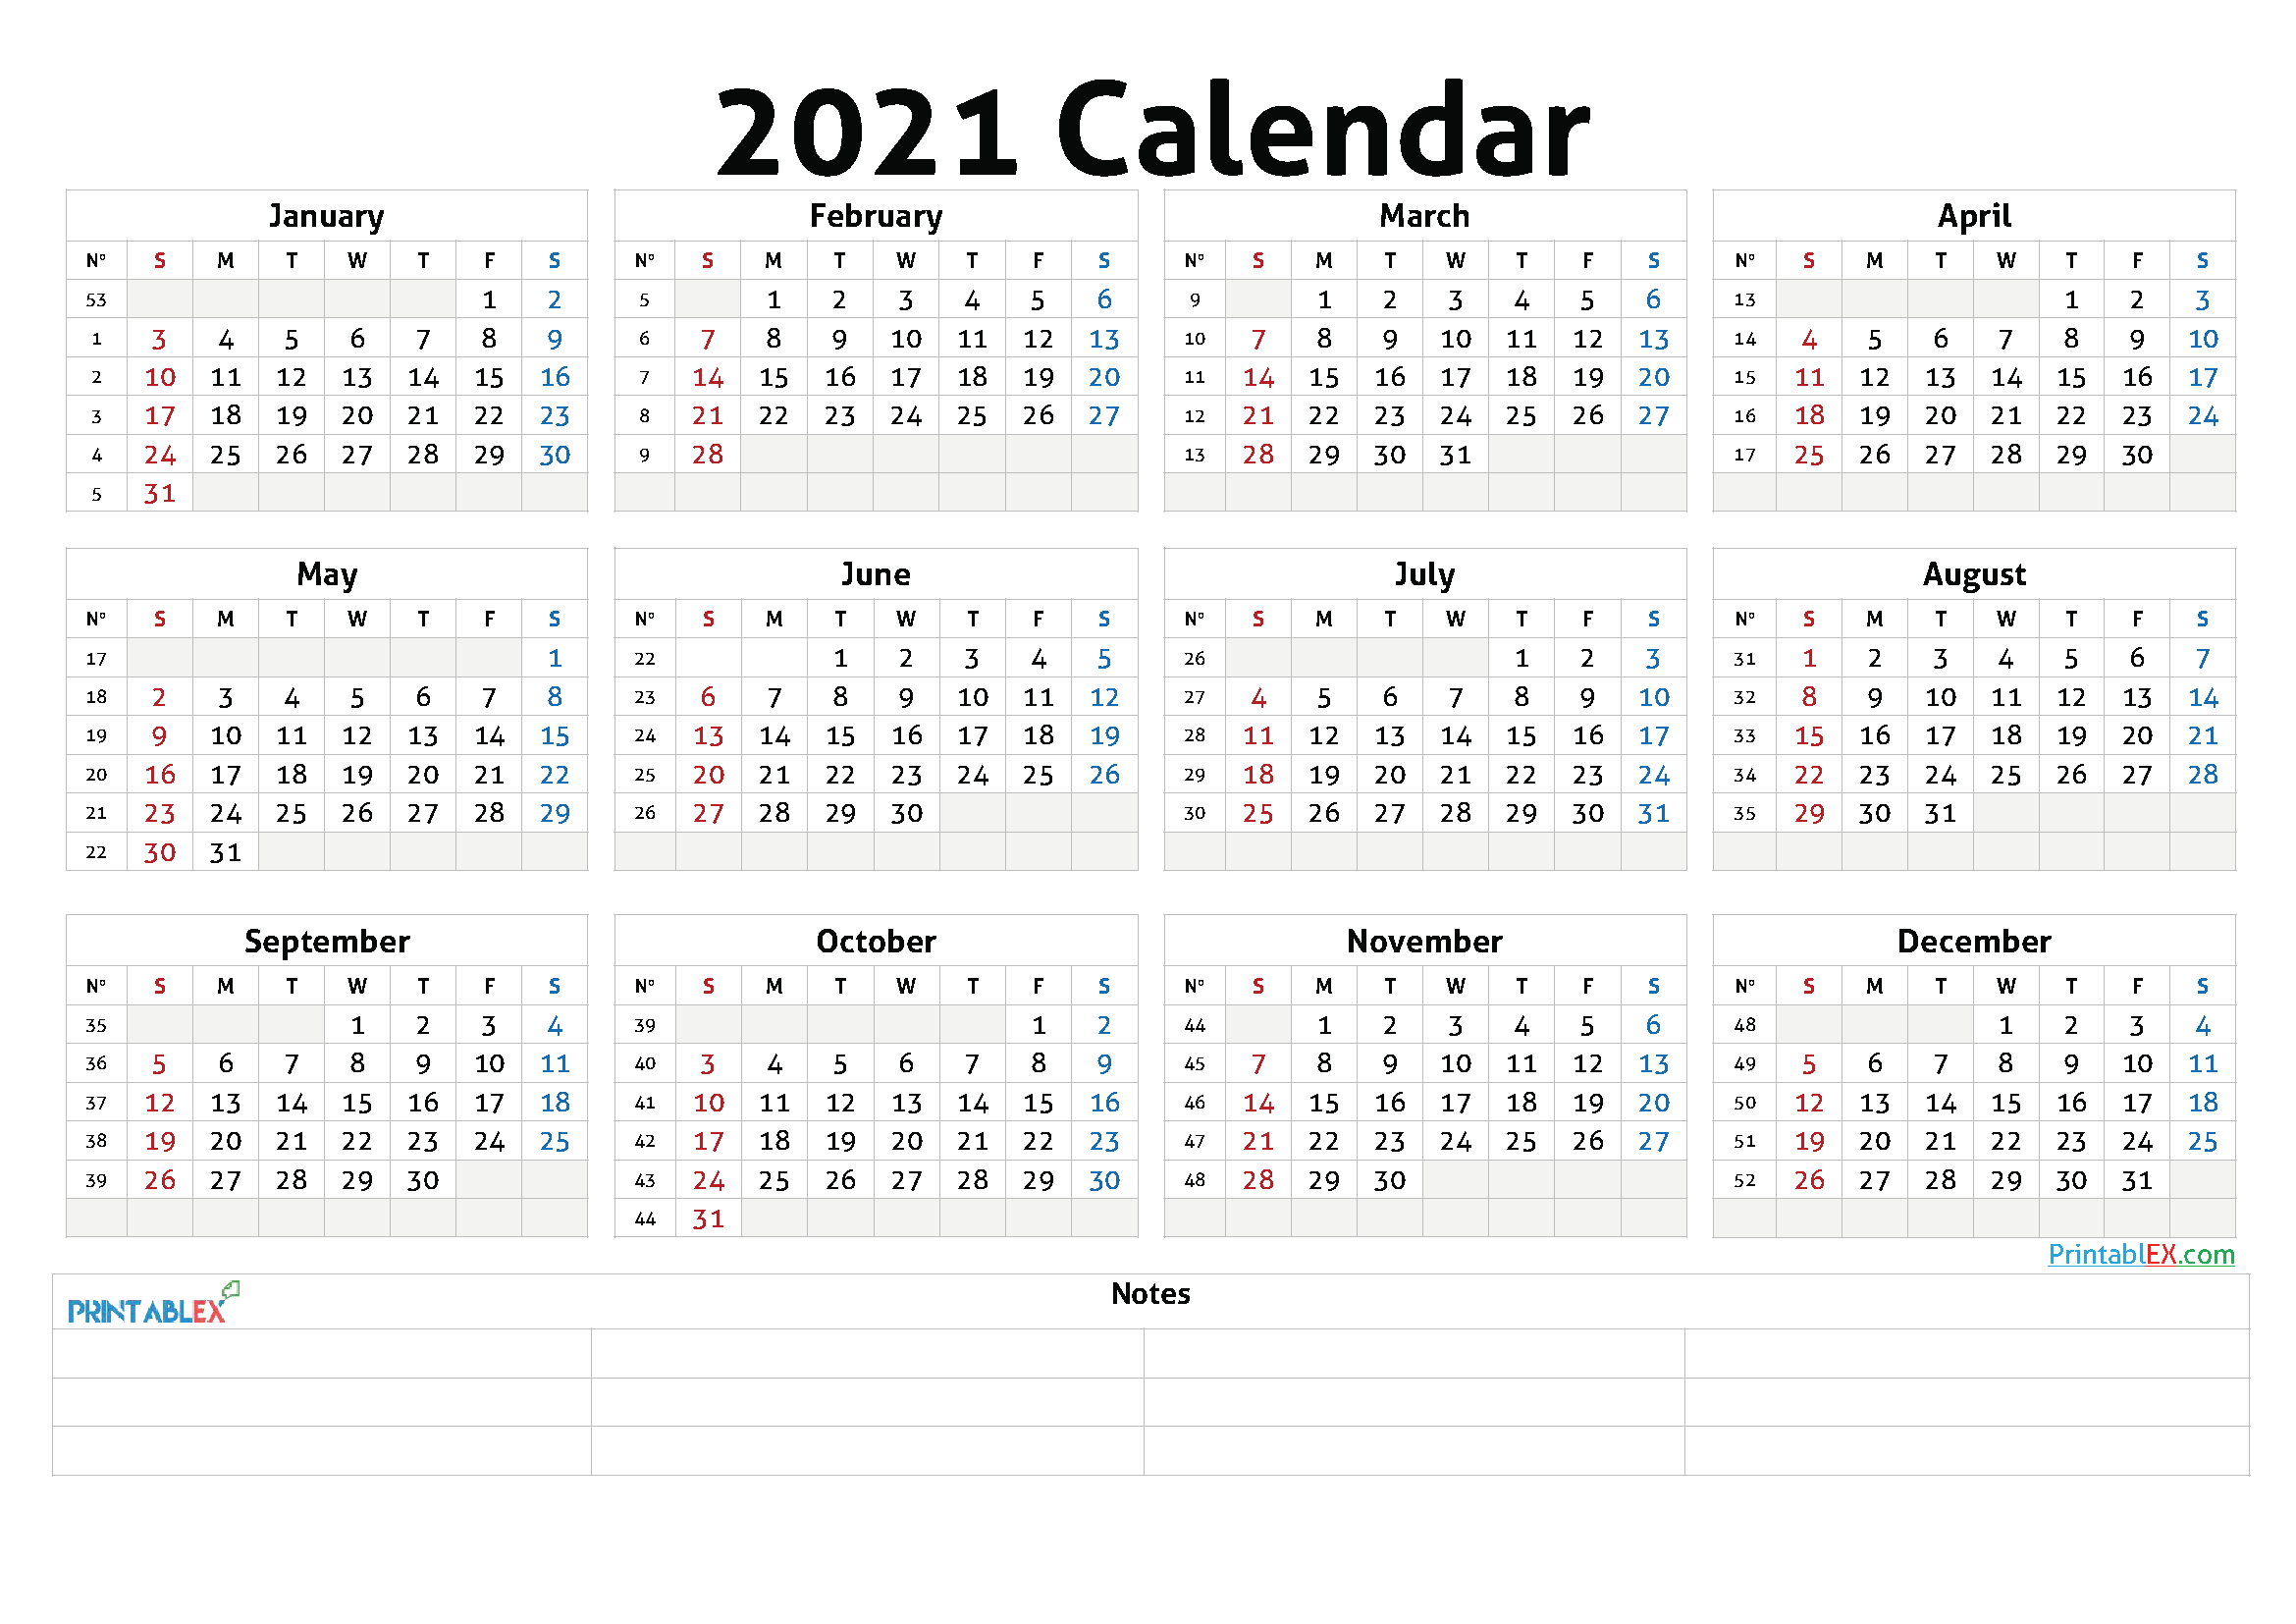 2021 Annual Calendar Printable - 21Ytw47-2021 Yearly Calendar Printable Free With Notes